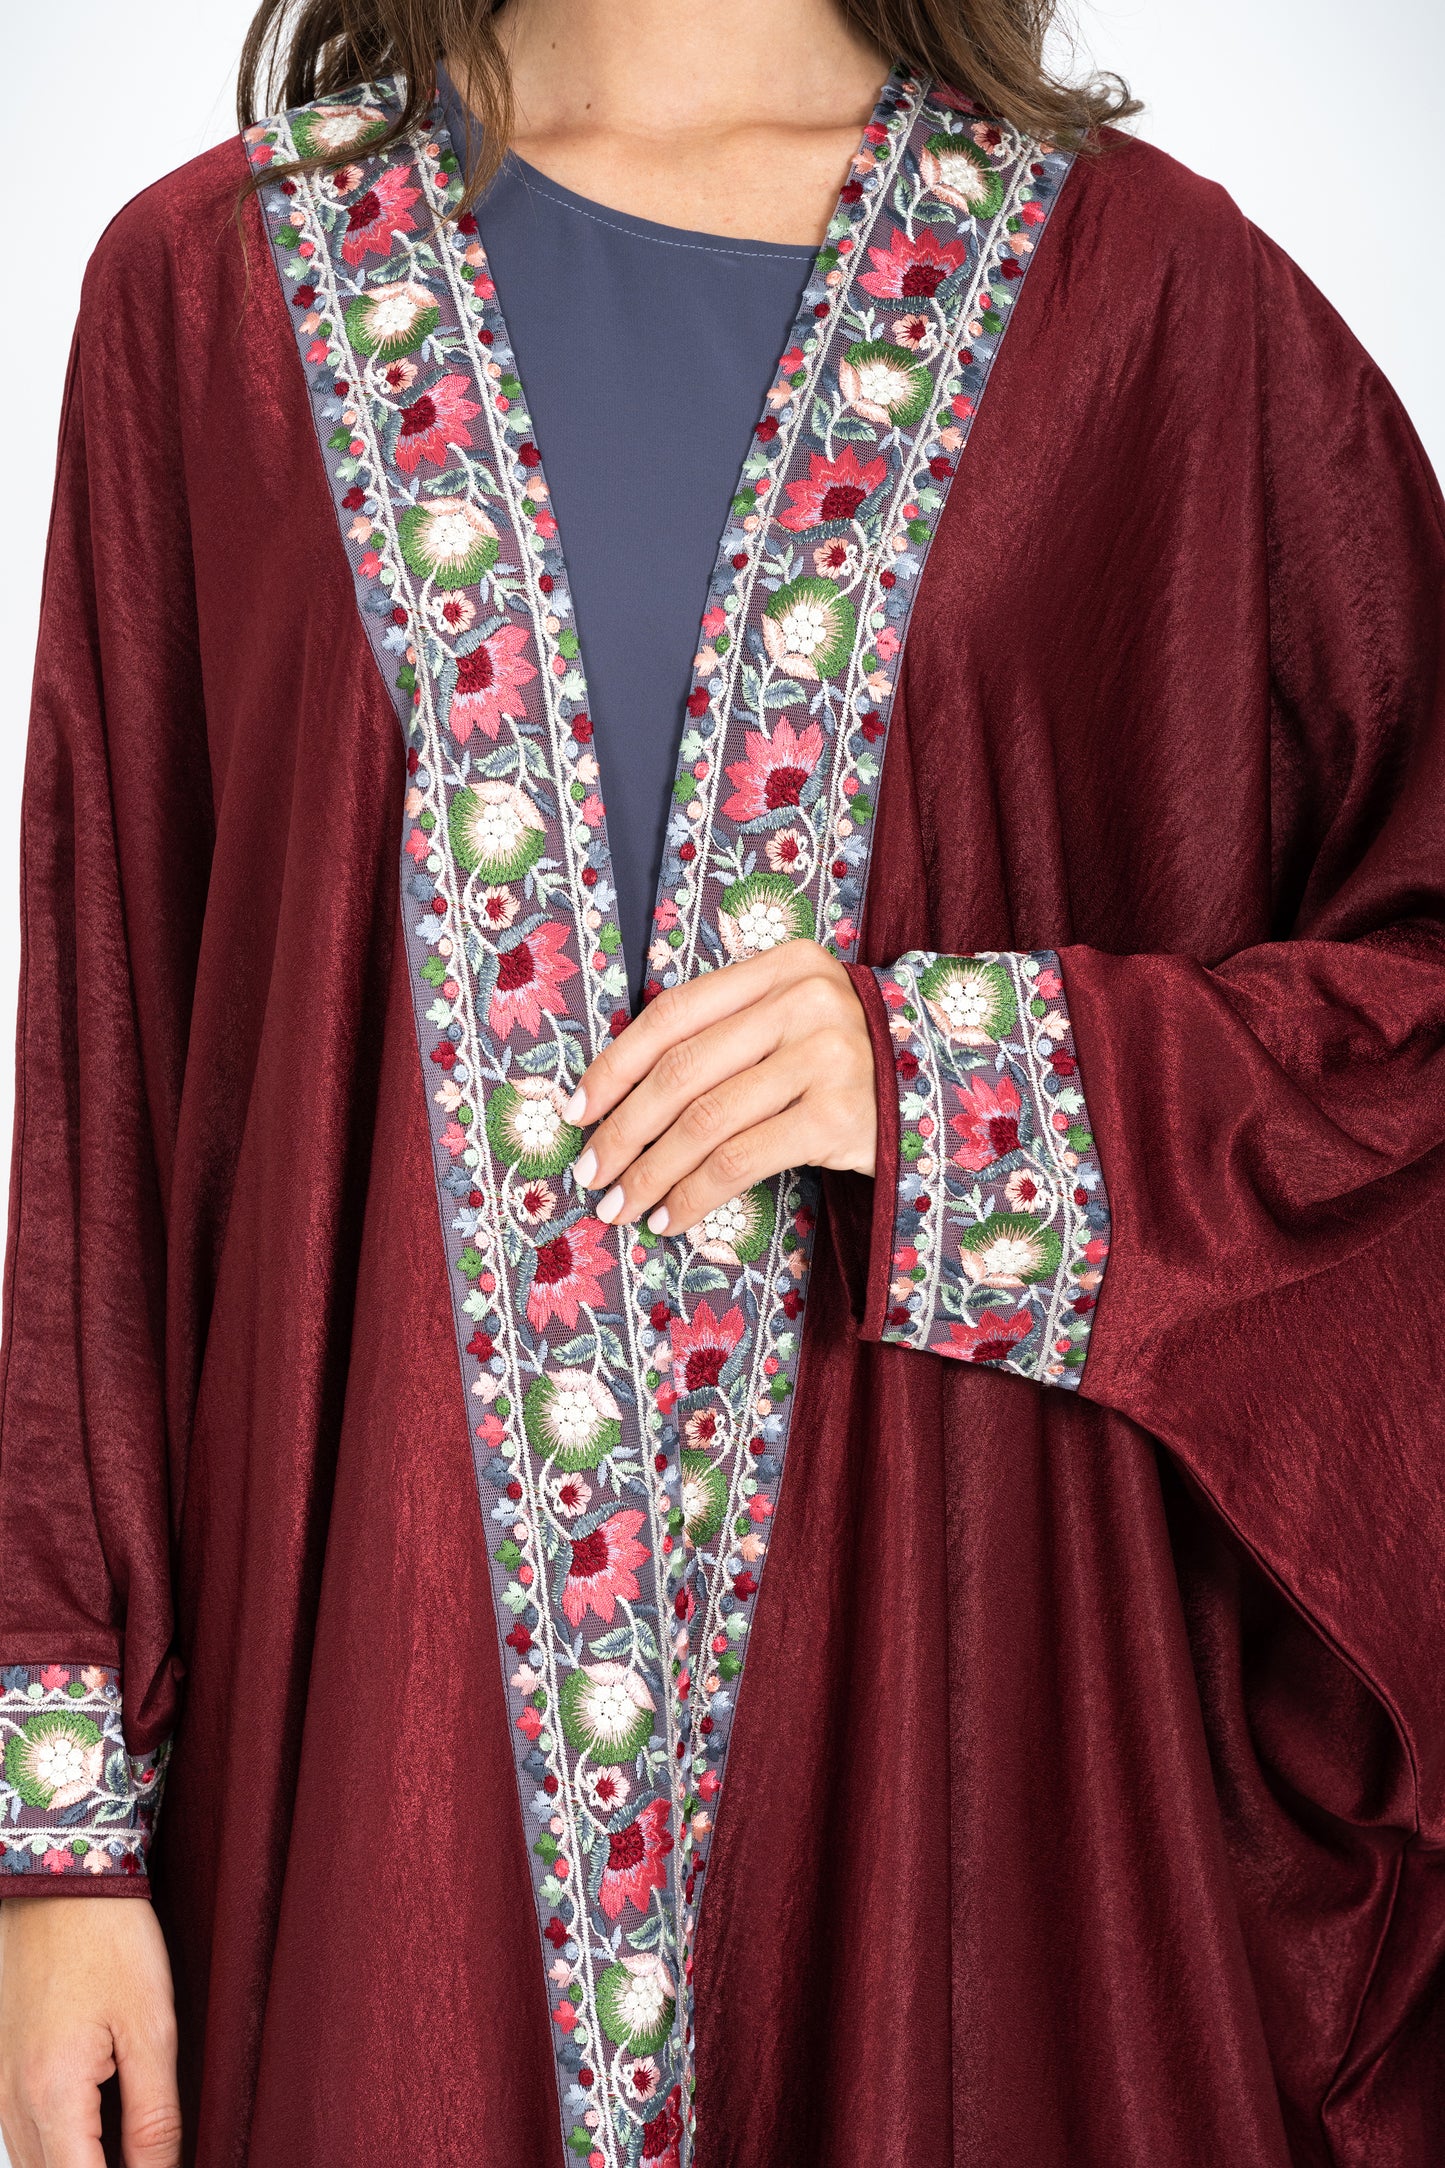 Maroon lace abaya